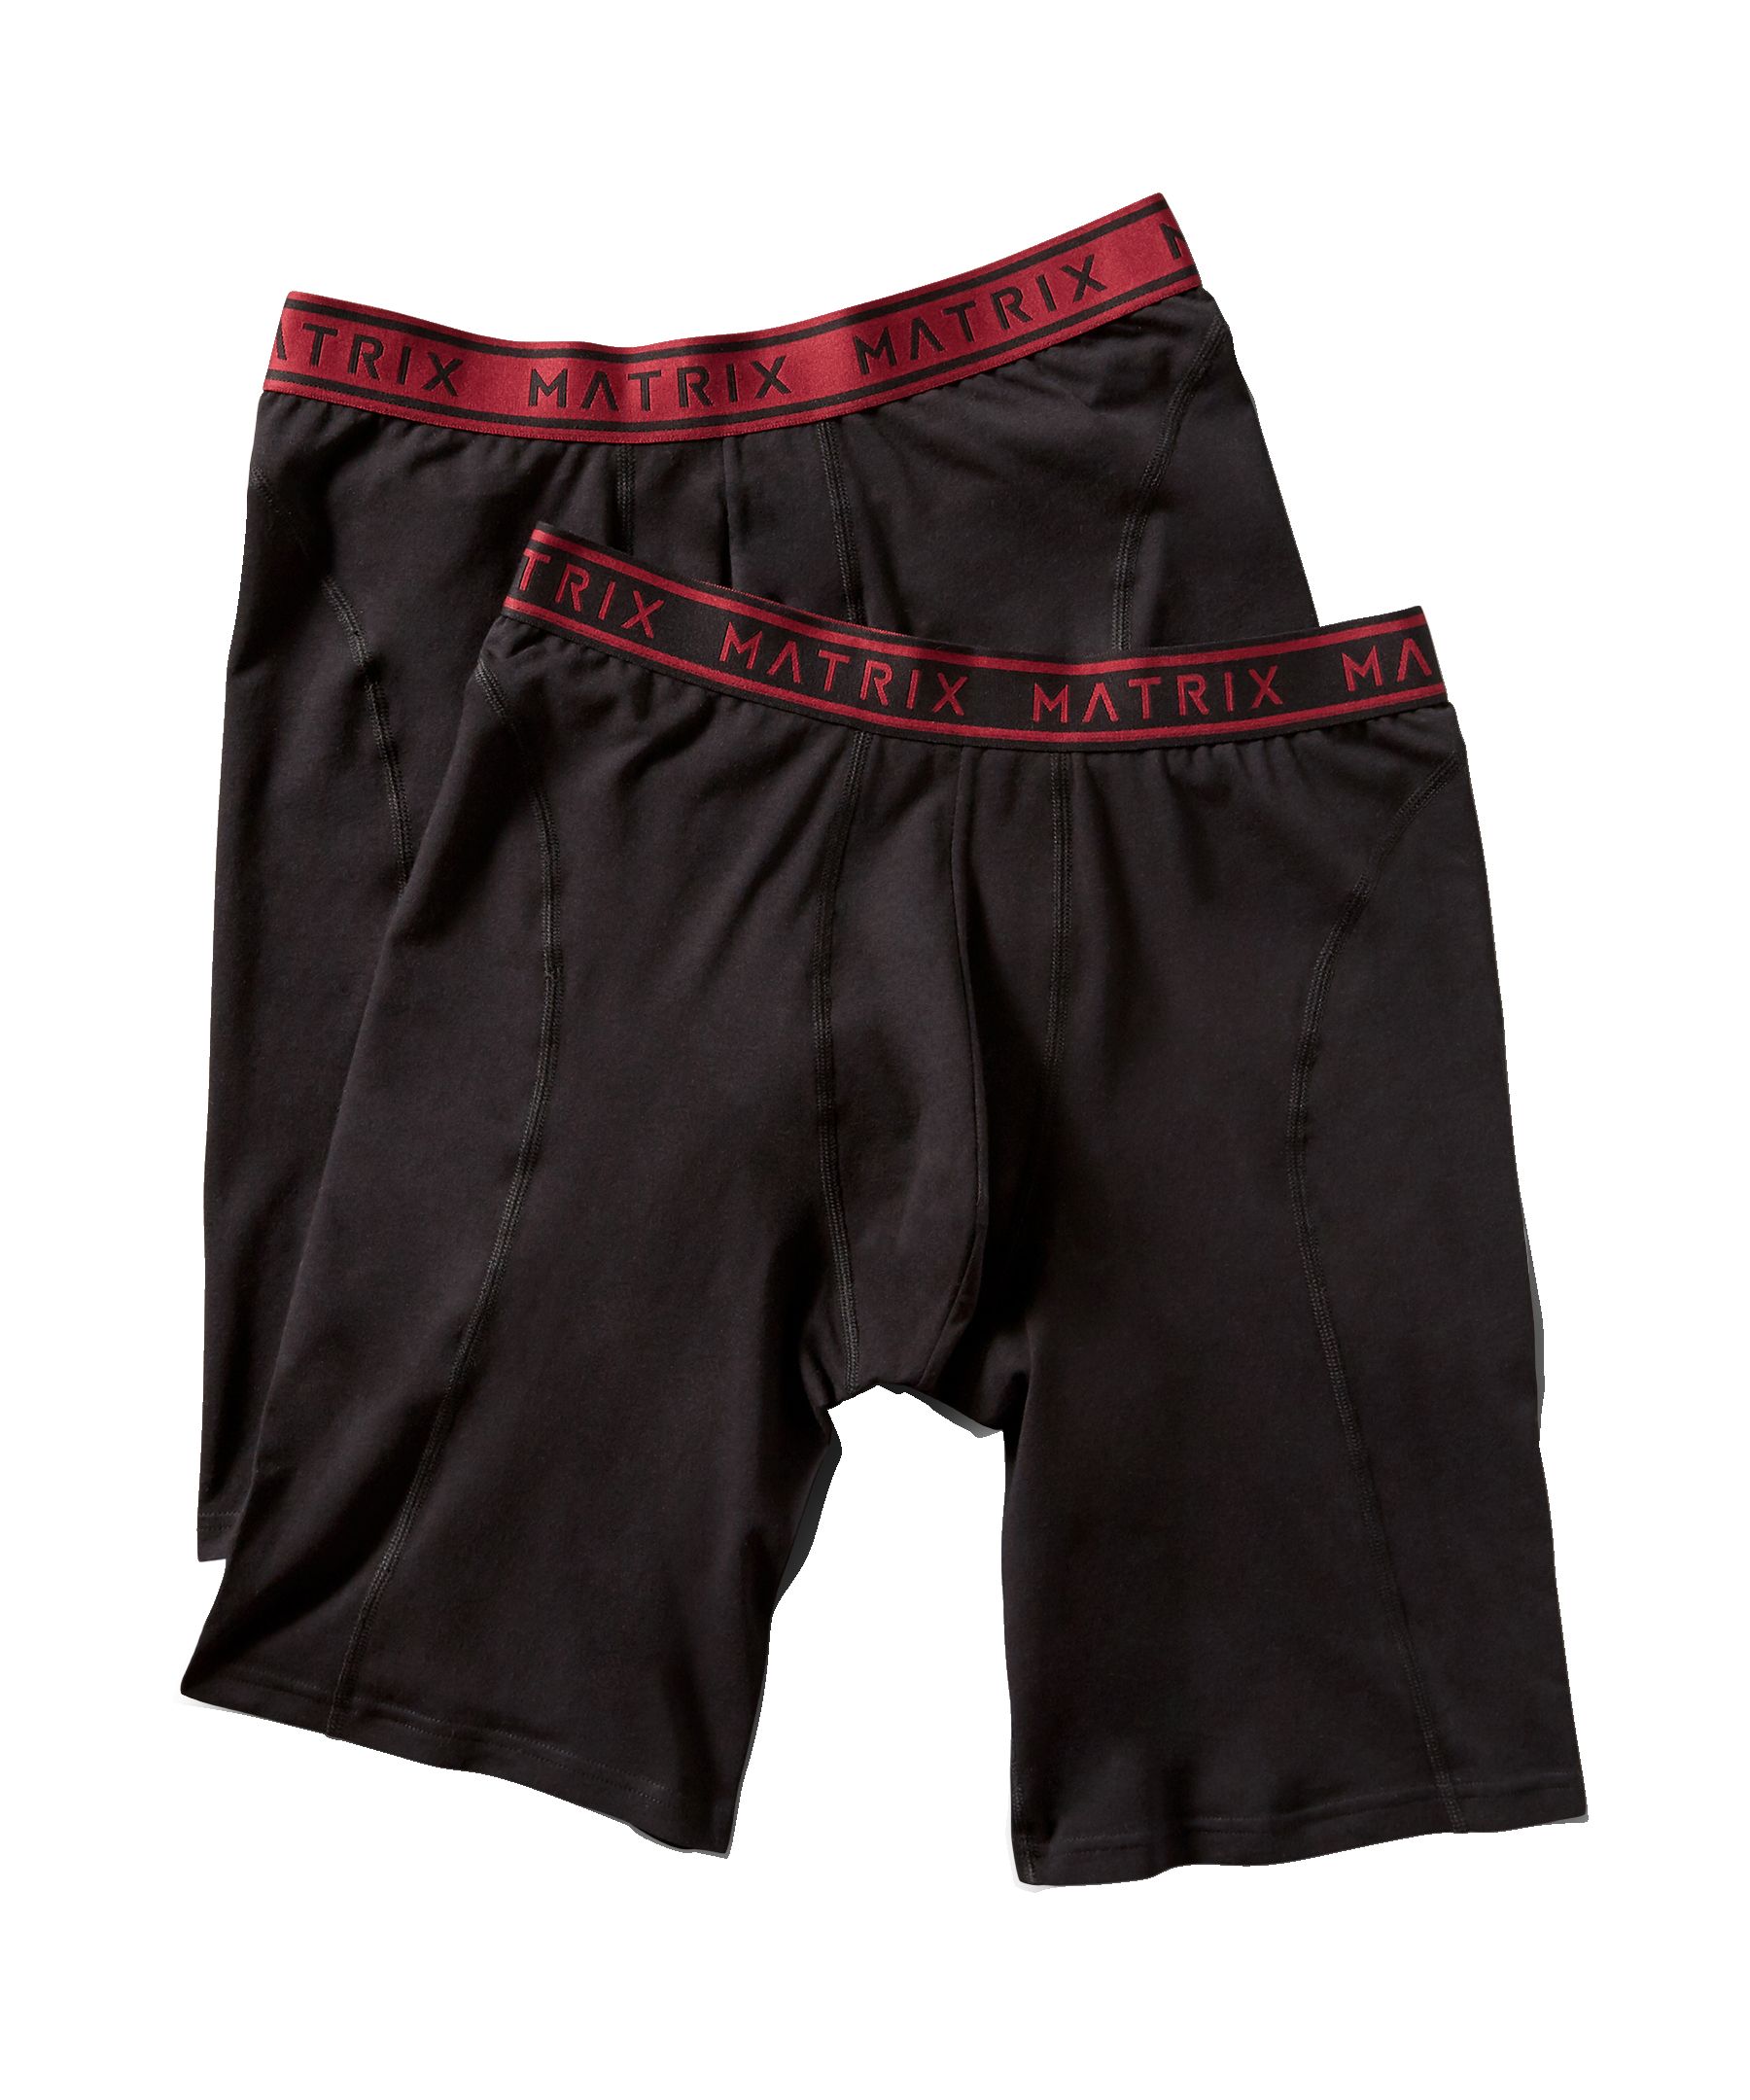 Matrix Men's 2 Pack Cotton Stretch Long Boxer Briefs Underwear